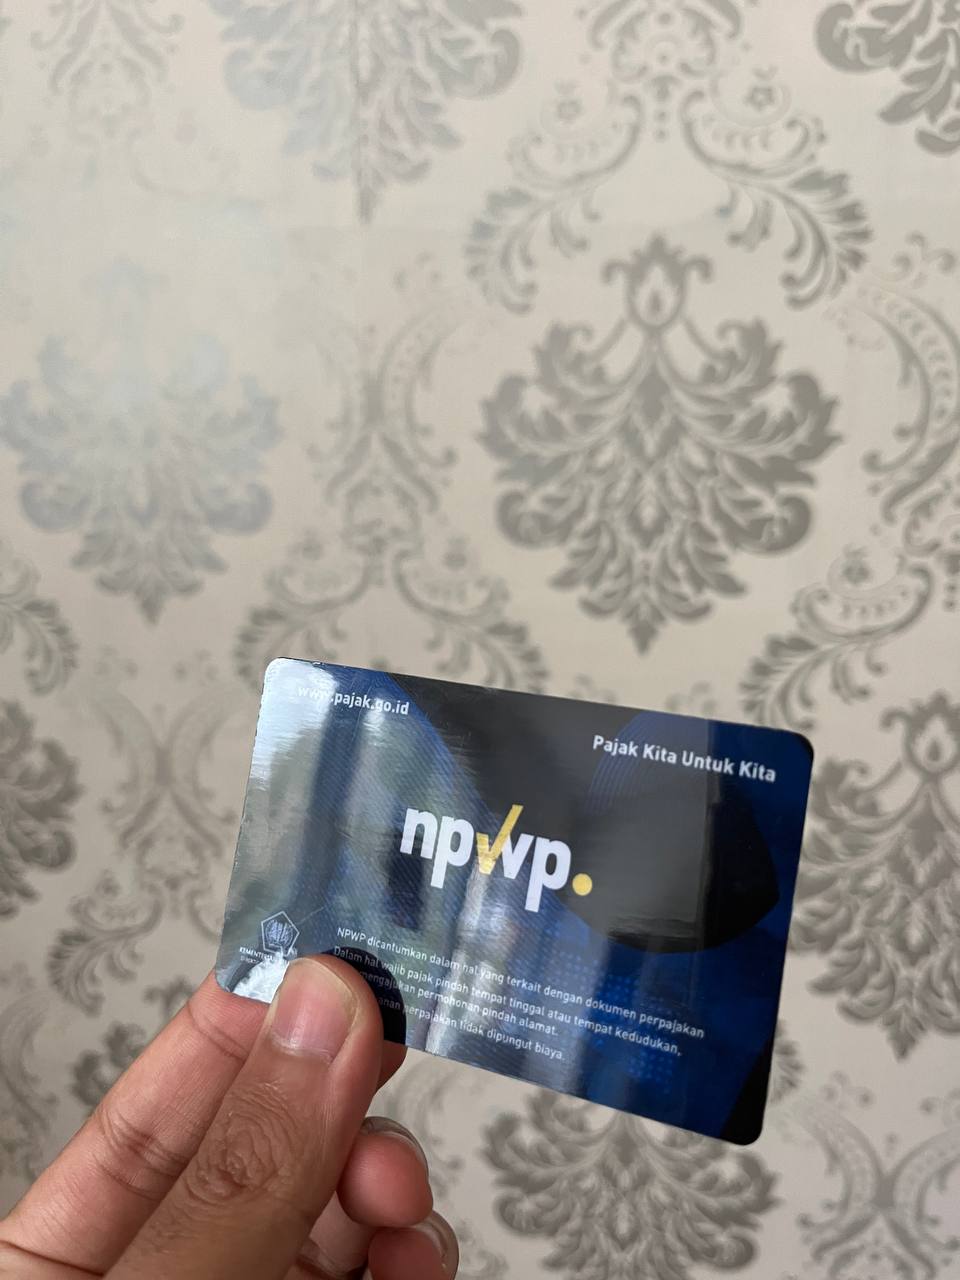 Cetak ID Card NPWP di Pekanbaru